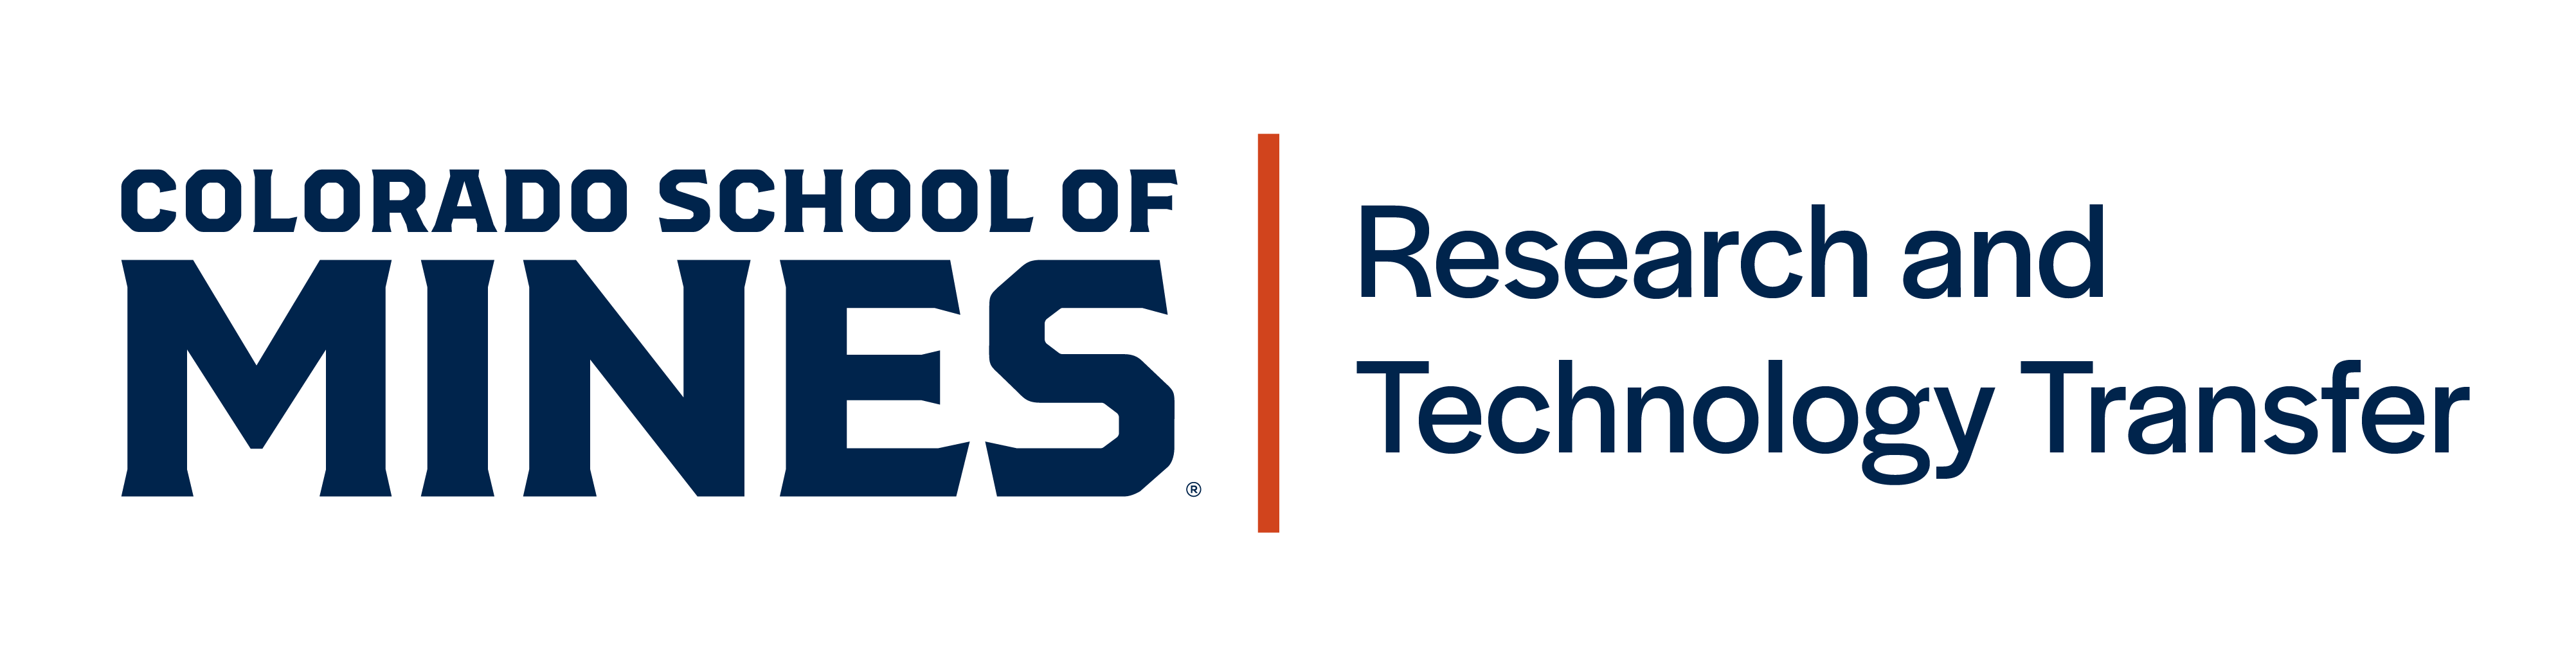 Mines-ResearchAndTechnologyTransfer-logo